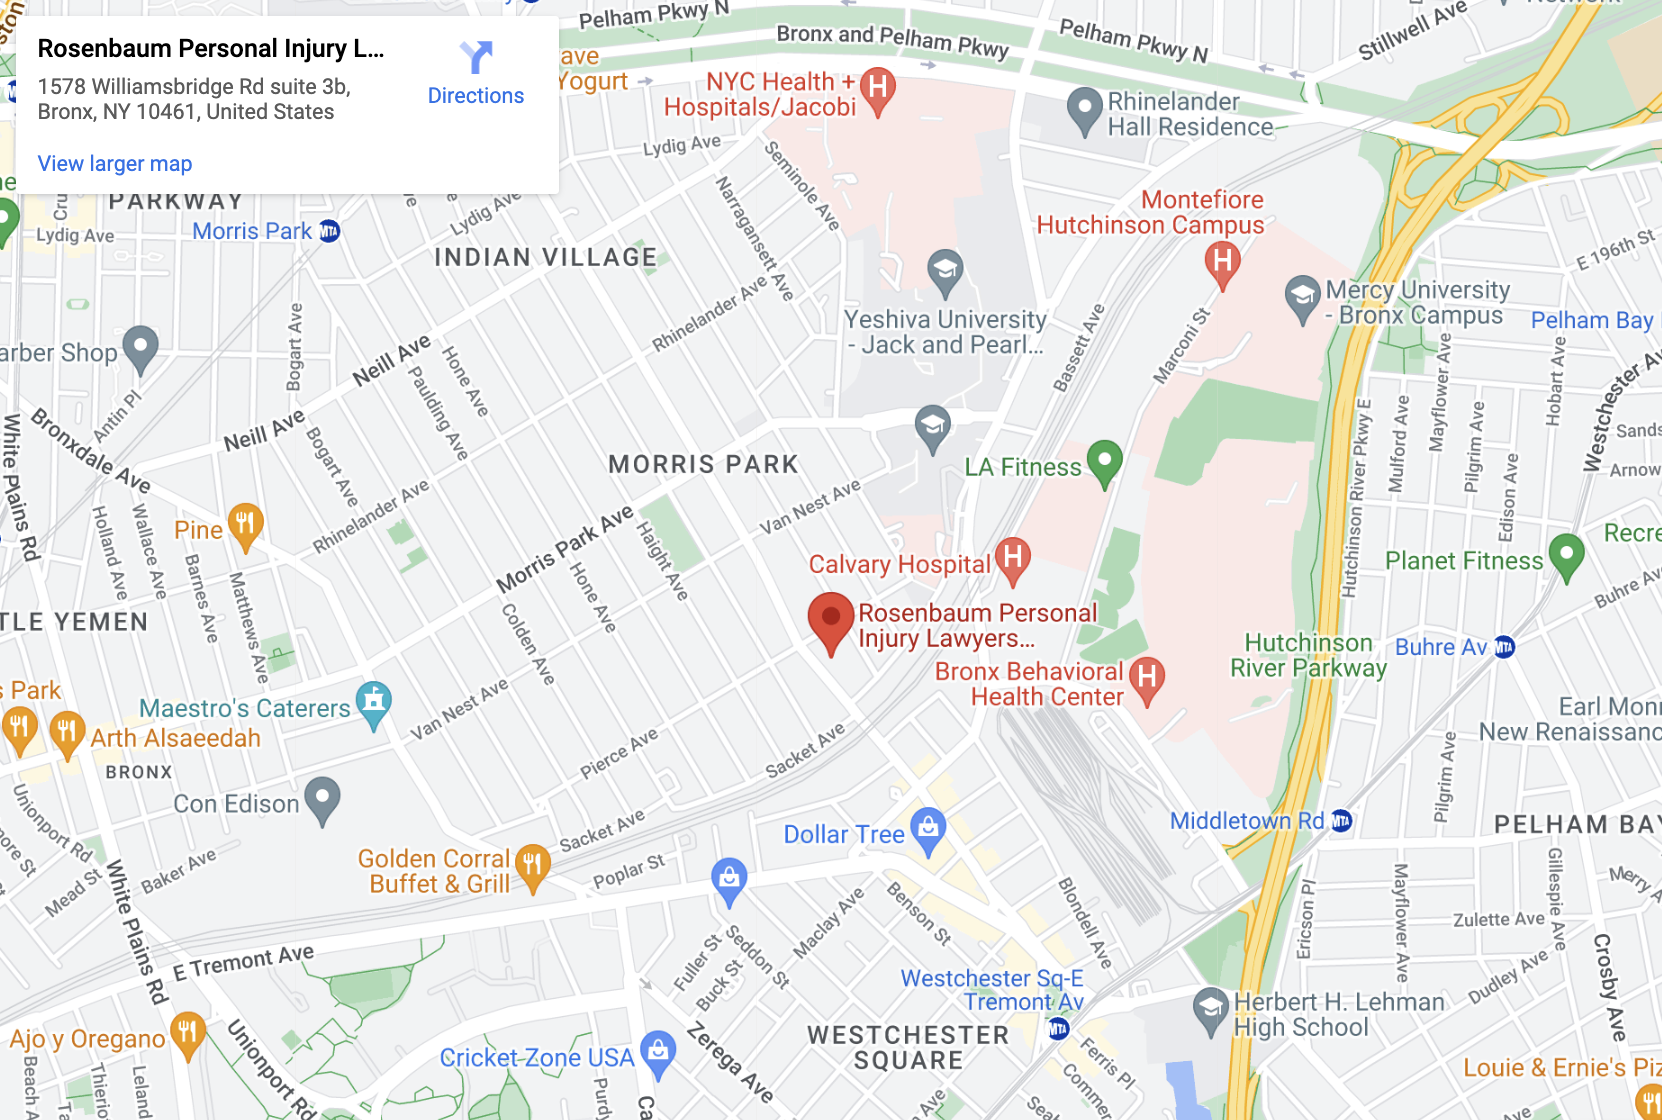 Rosenbaum Persona Injury Lawyers Bronx, NY Office Location